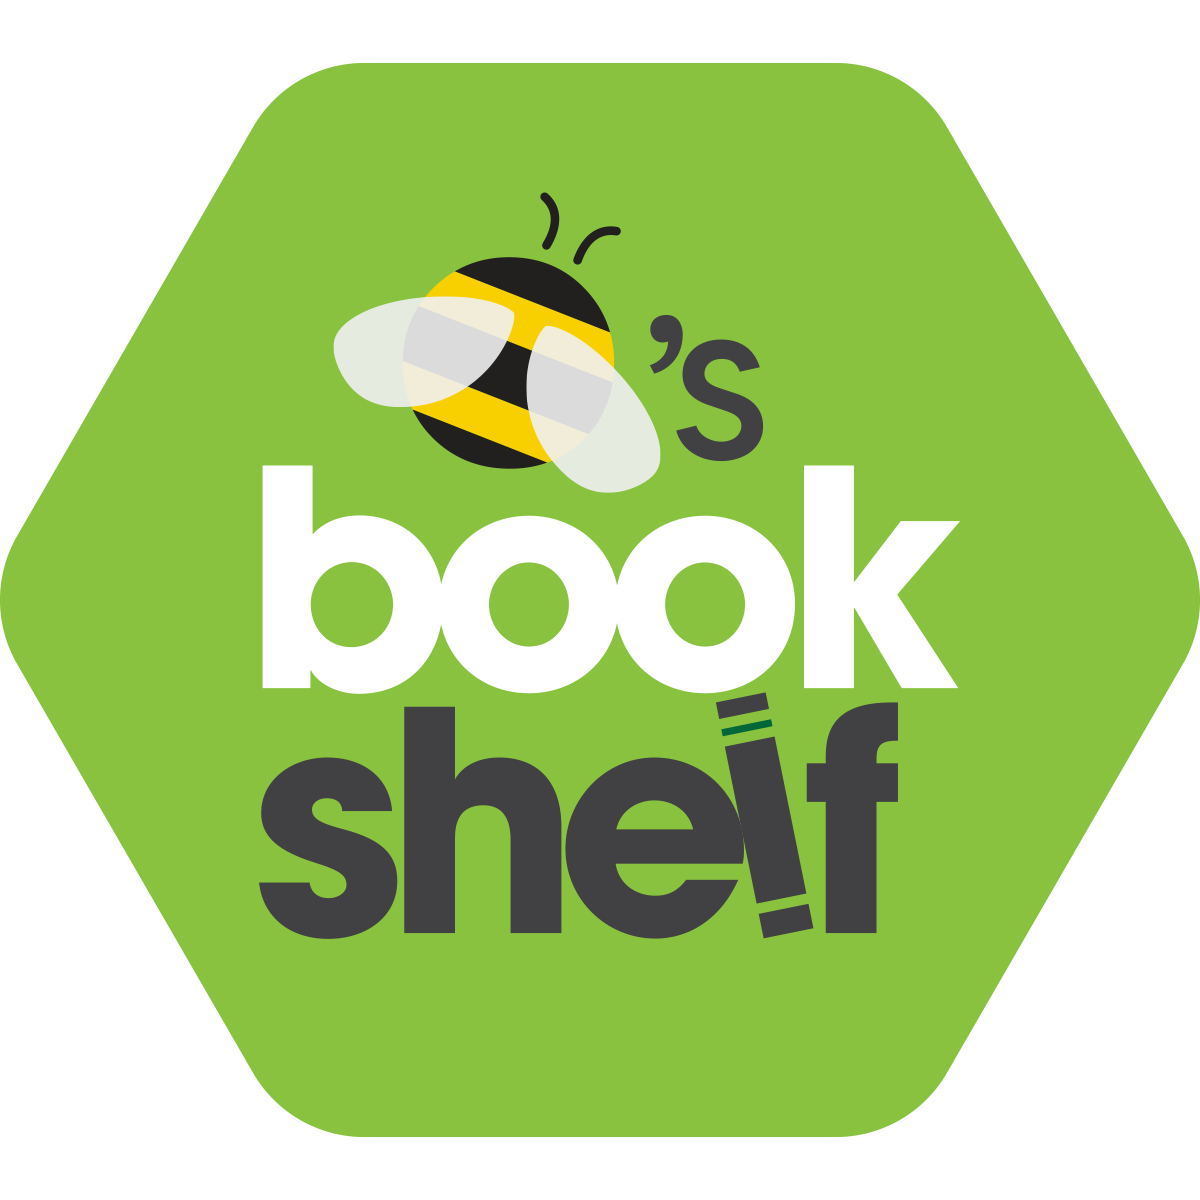 Bees Bookshelf book club logo